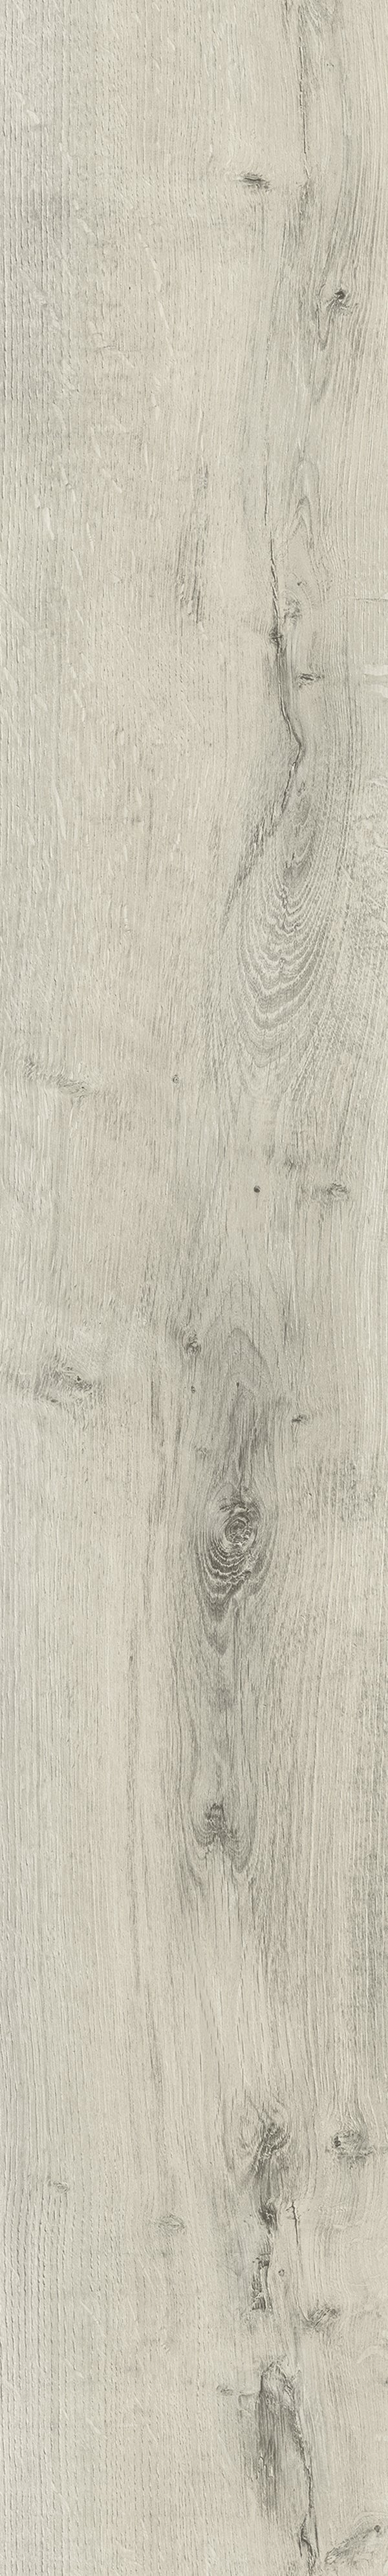 Calcolo Winnipeg silver birch plank water resistant laminate flooring 8mm